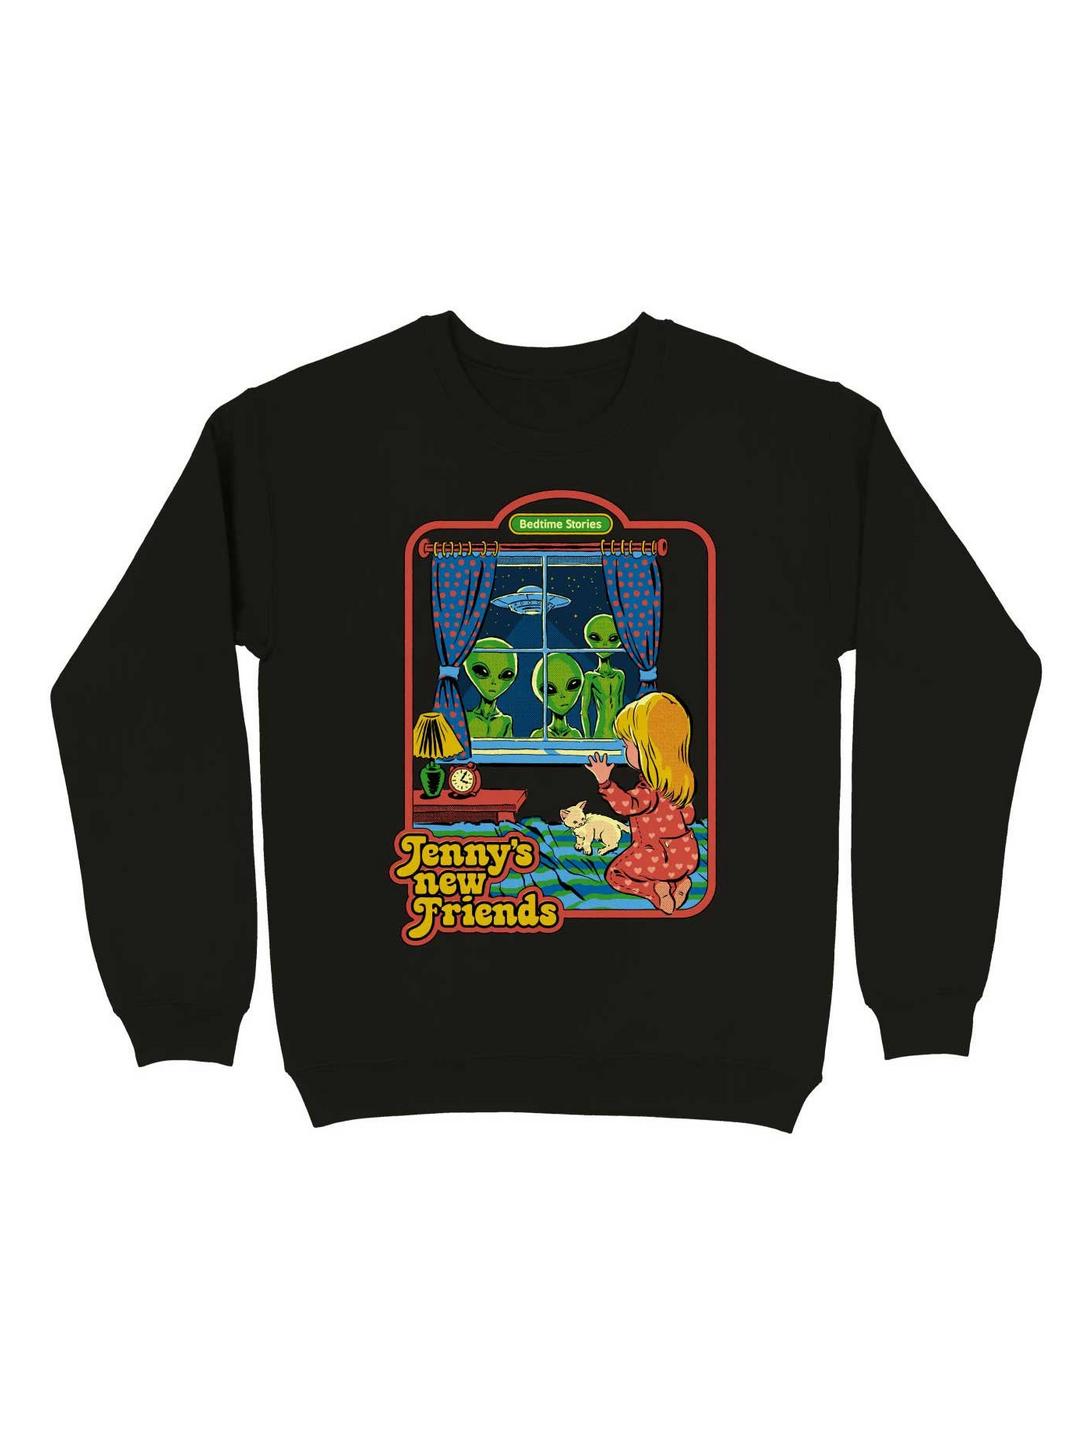 Jenny's New Friends Sweatshirt By Steven Rhodes, BLACK, hi-res